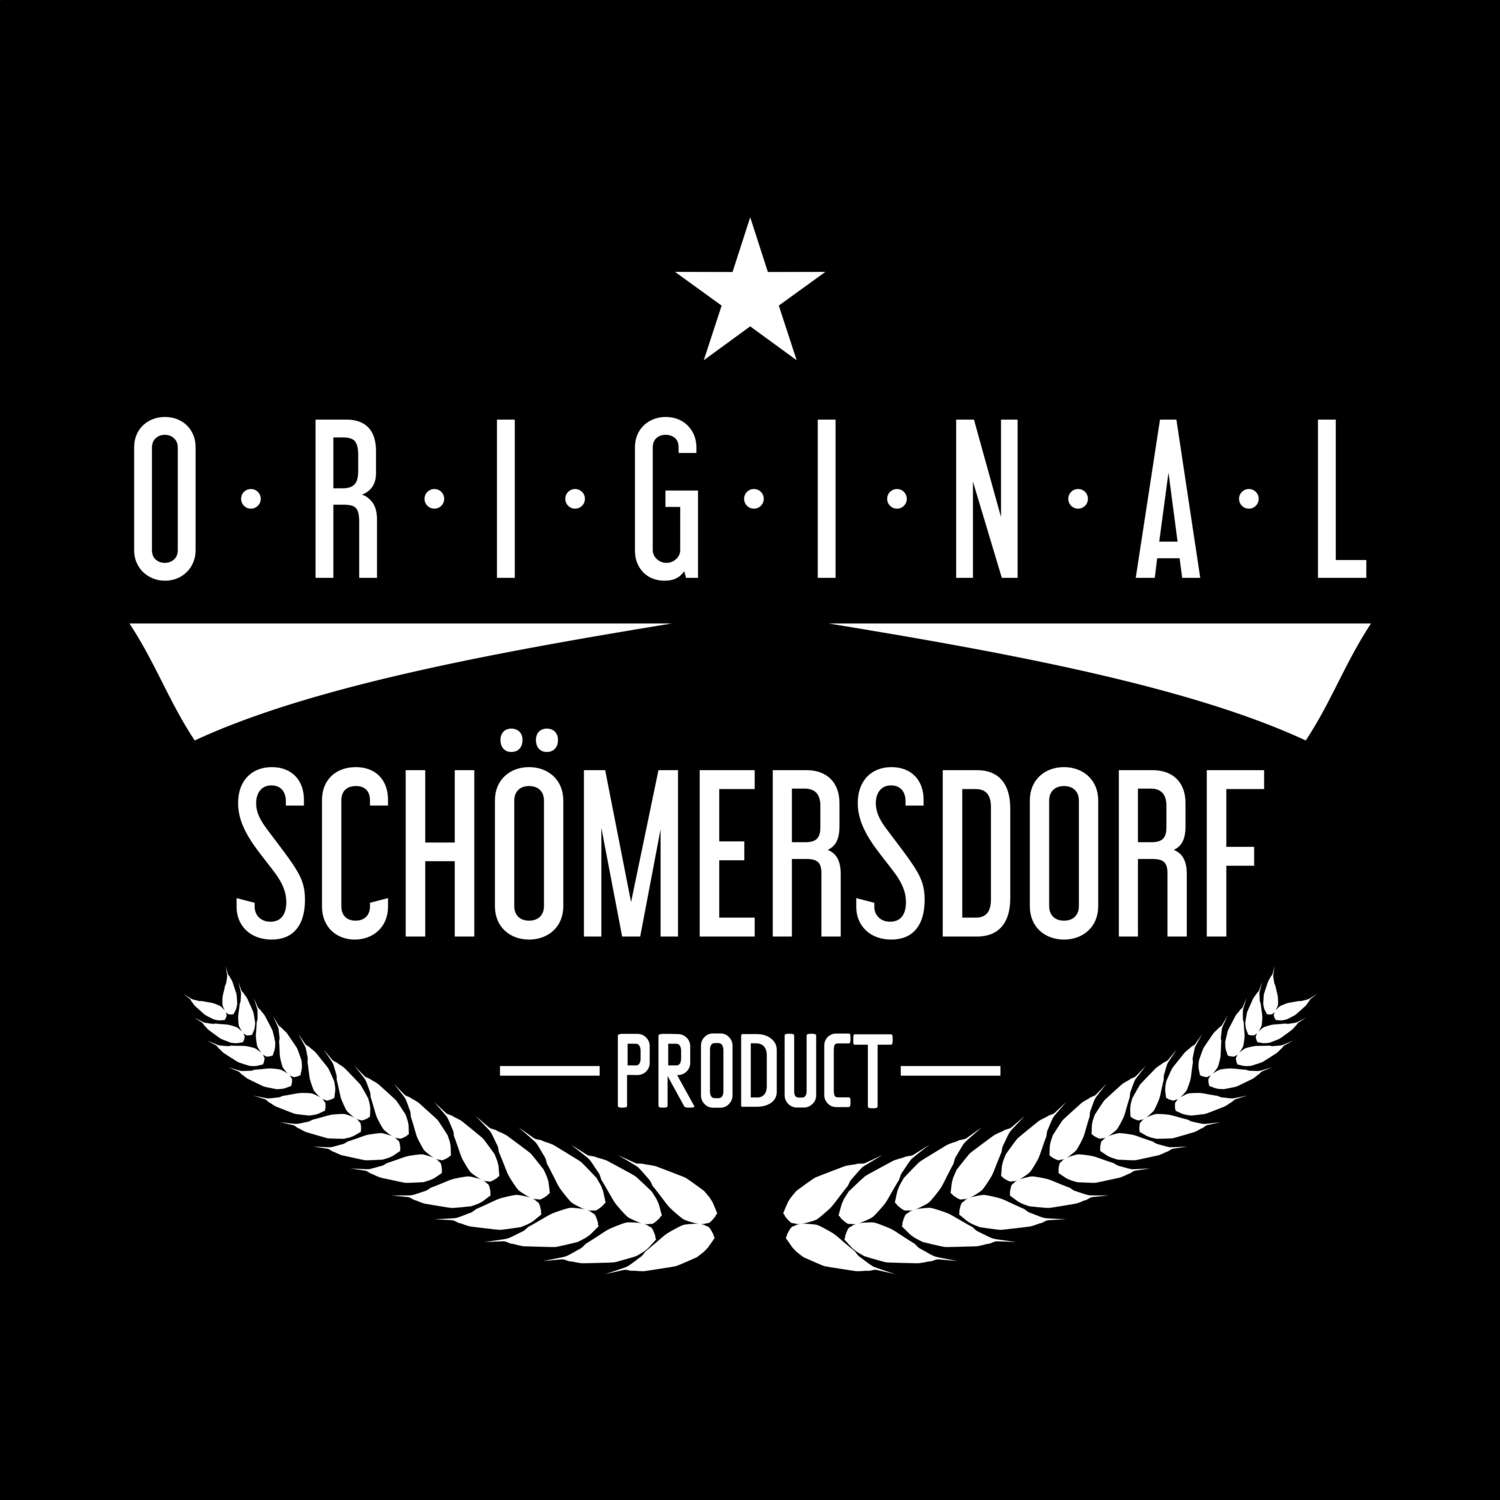 Schömersdorf T-Shirt »Original Product«